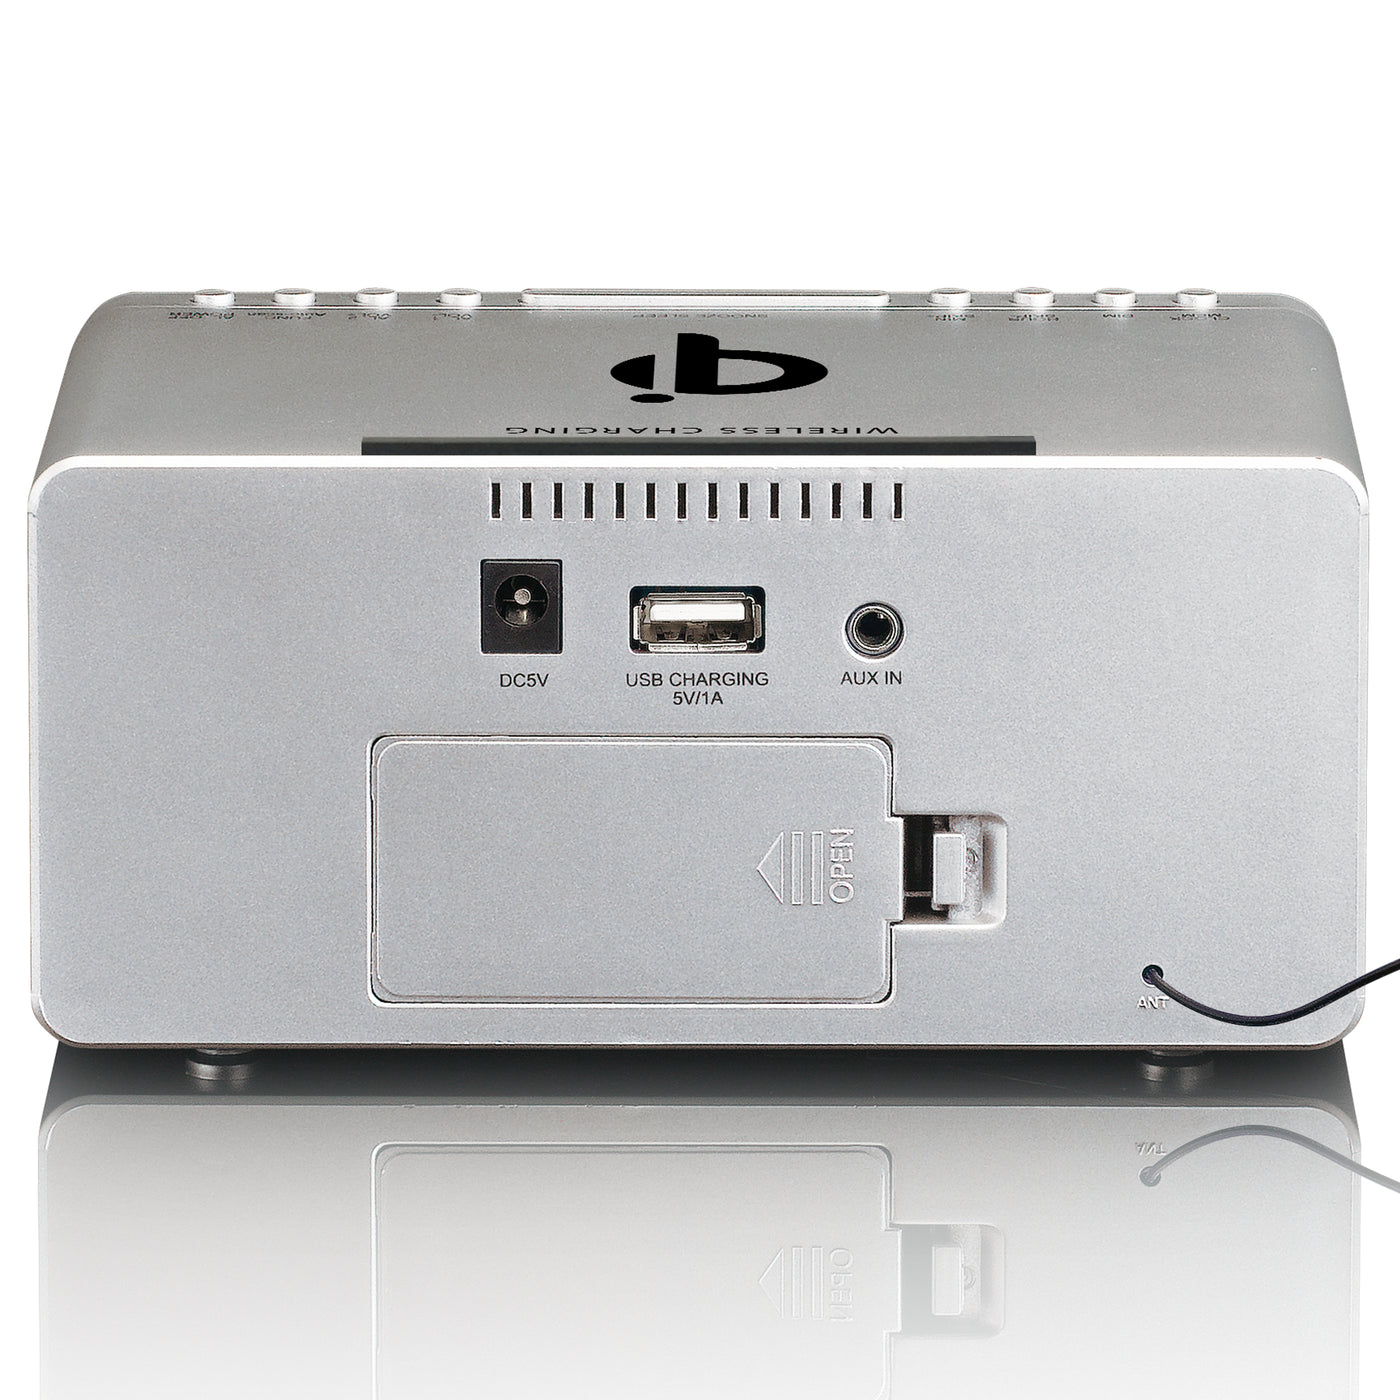 LENCO CR-550SI - Stereo FM Wekkerradio met USB en Qi Wireless smartphone oplader - Zilver